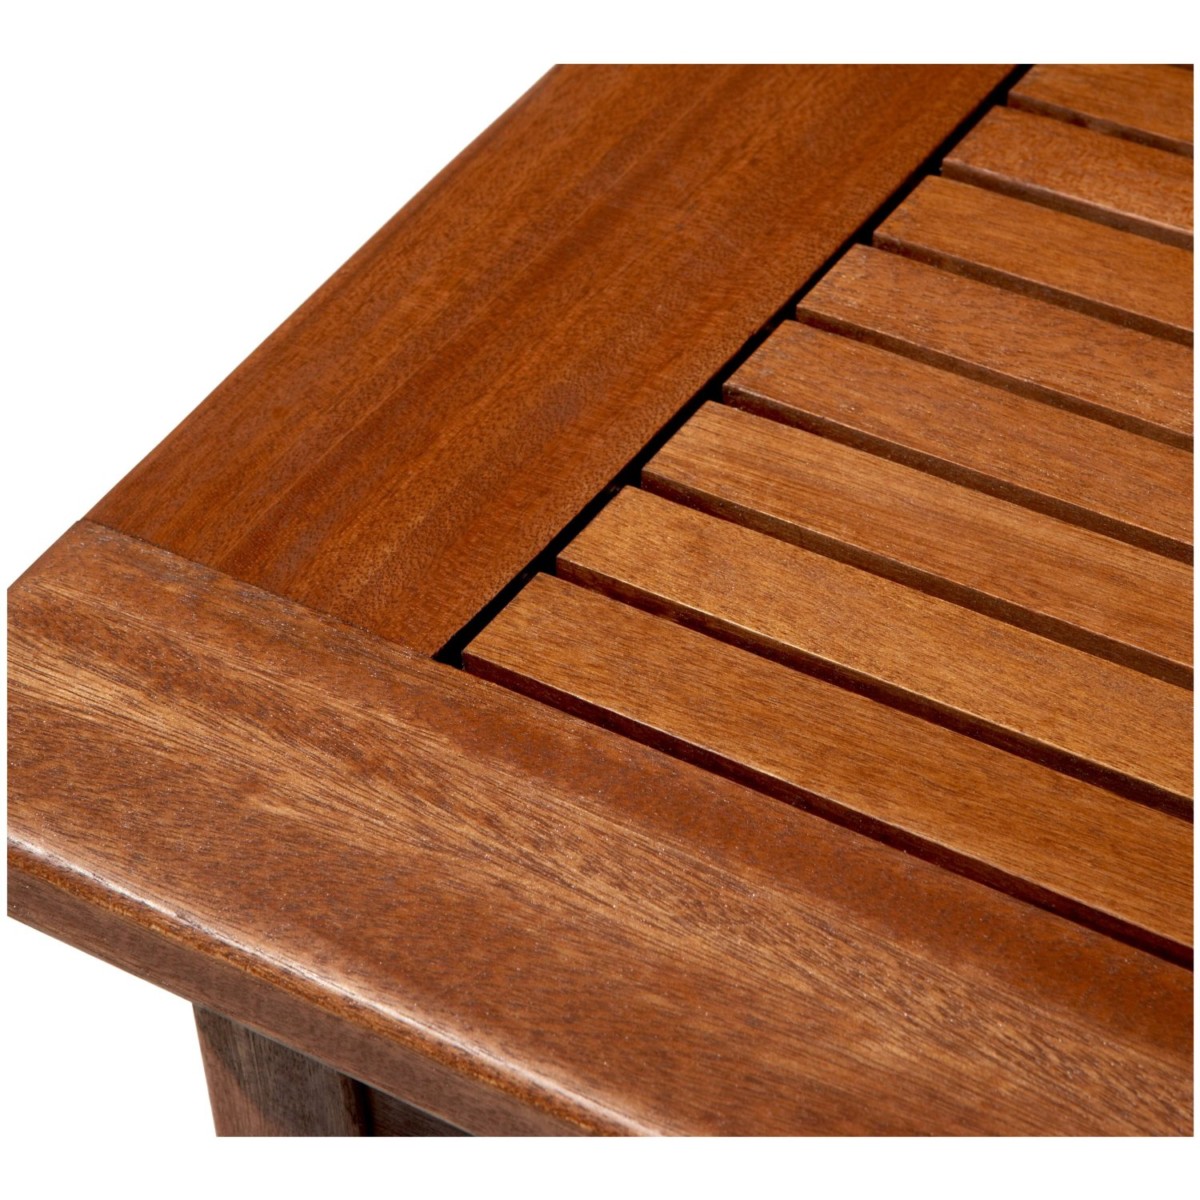 Strathwood Gibranta Table basse de jardin en bois dense (Résistante